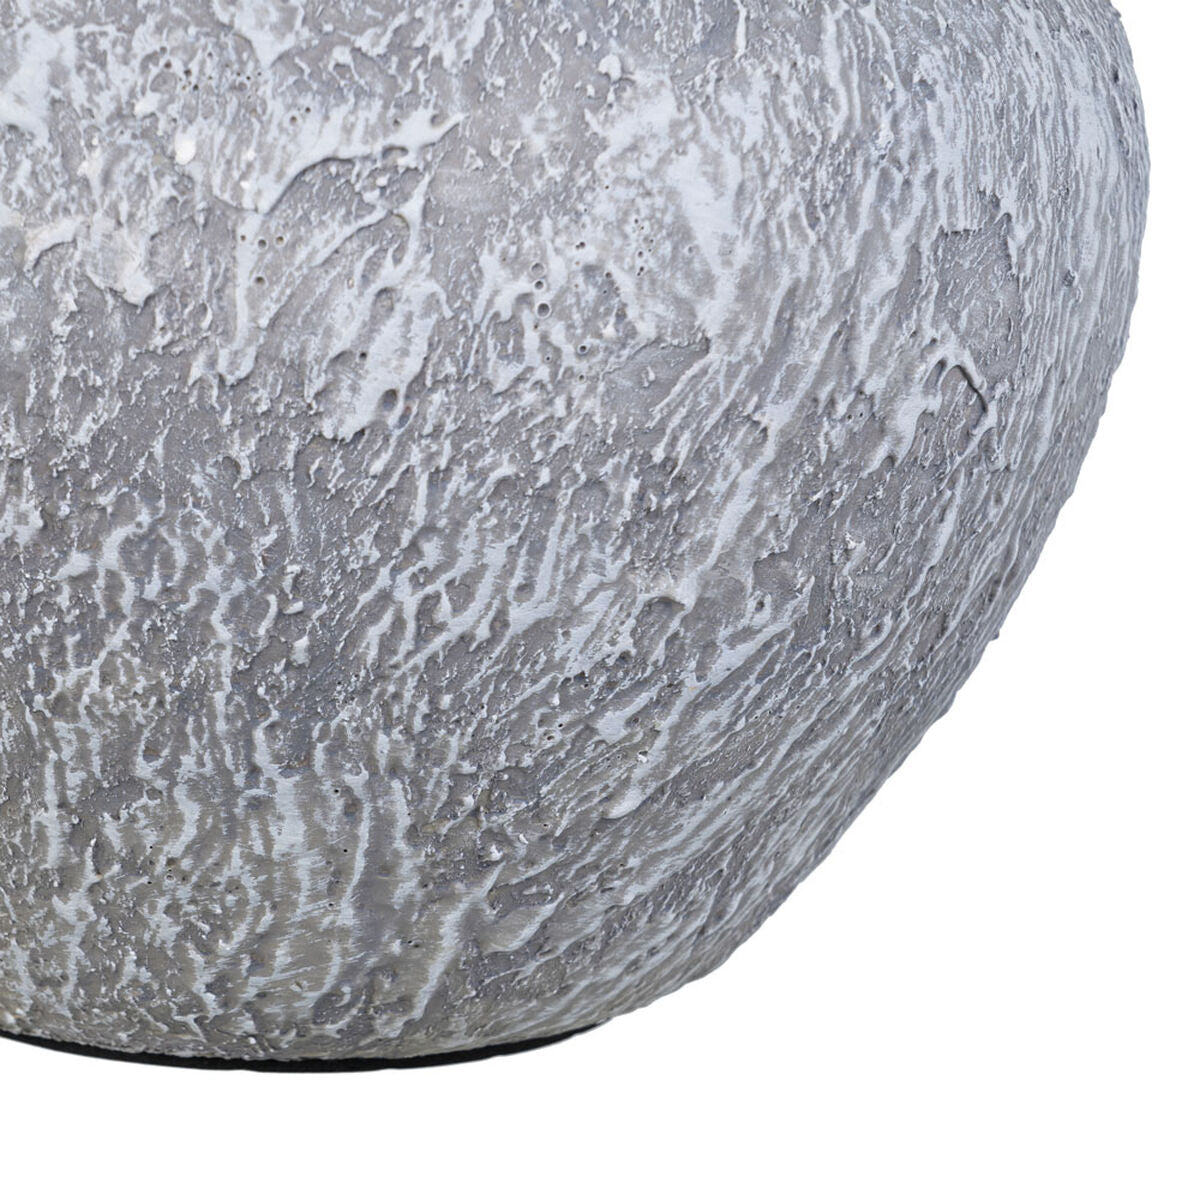 Gray ceramic table lamp 40 x 40 x 55 cm